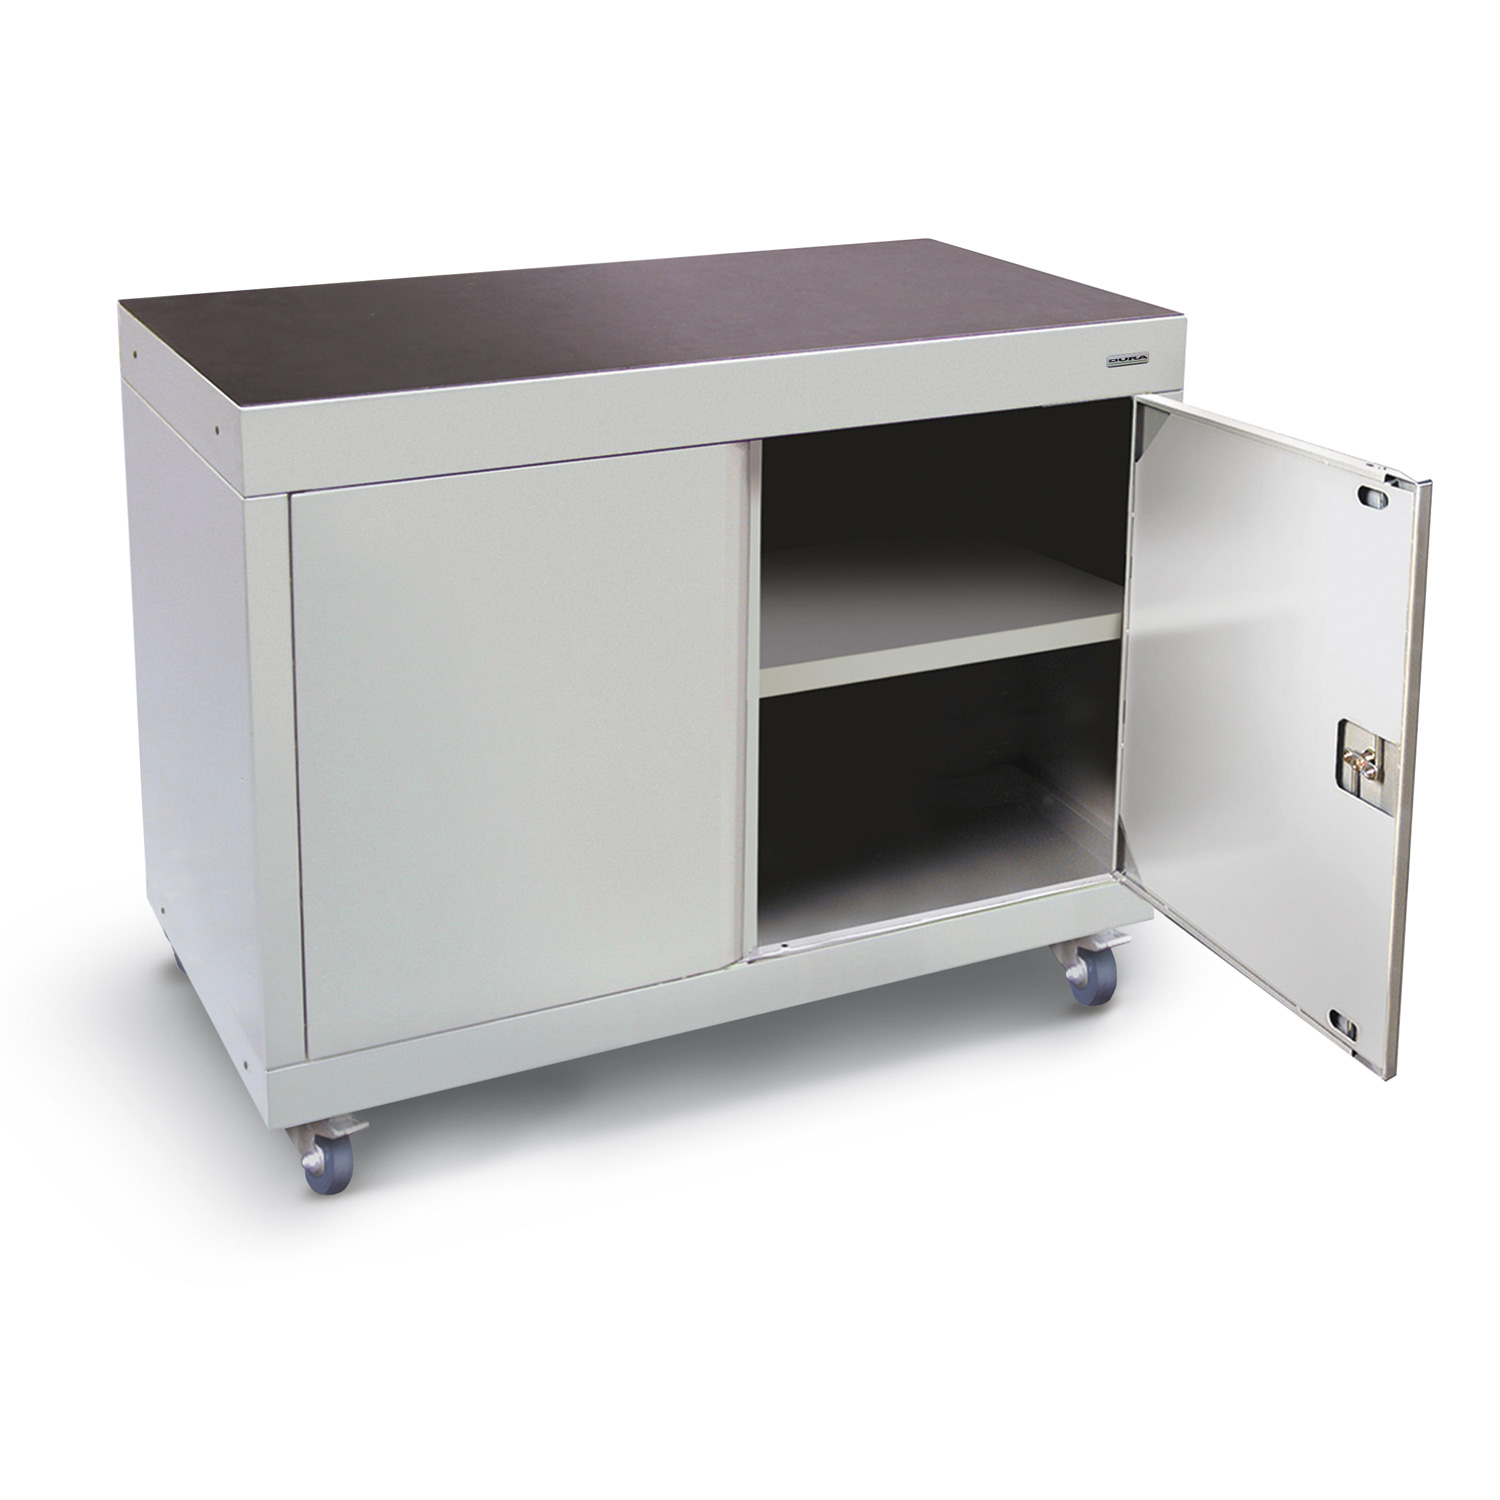 1200mm wide base cabinet (double hinged doors/castors)